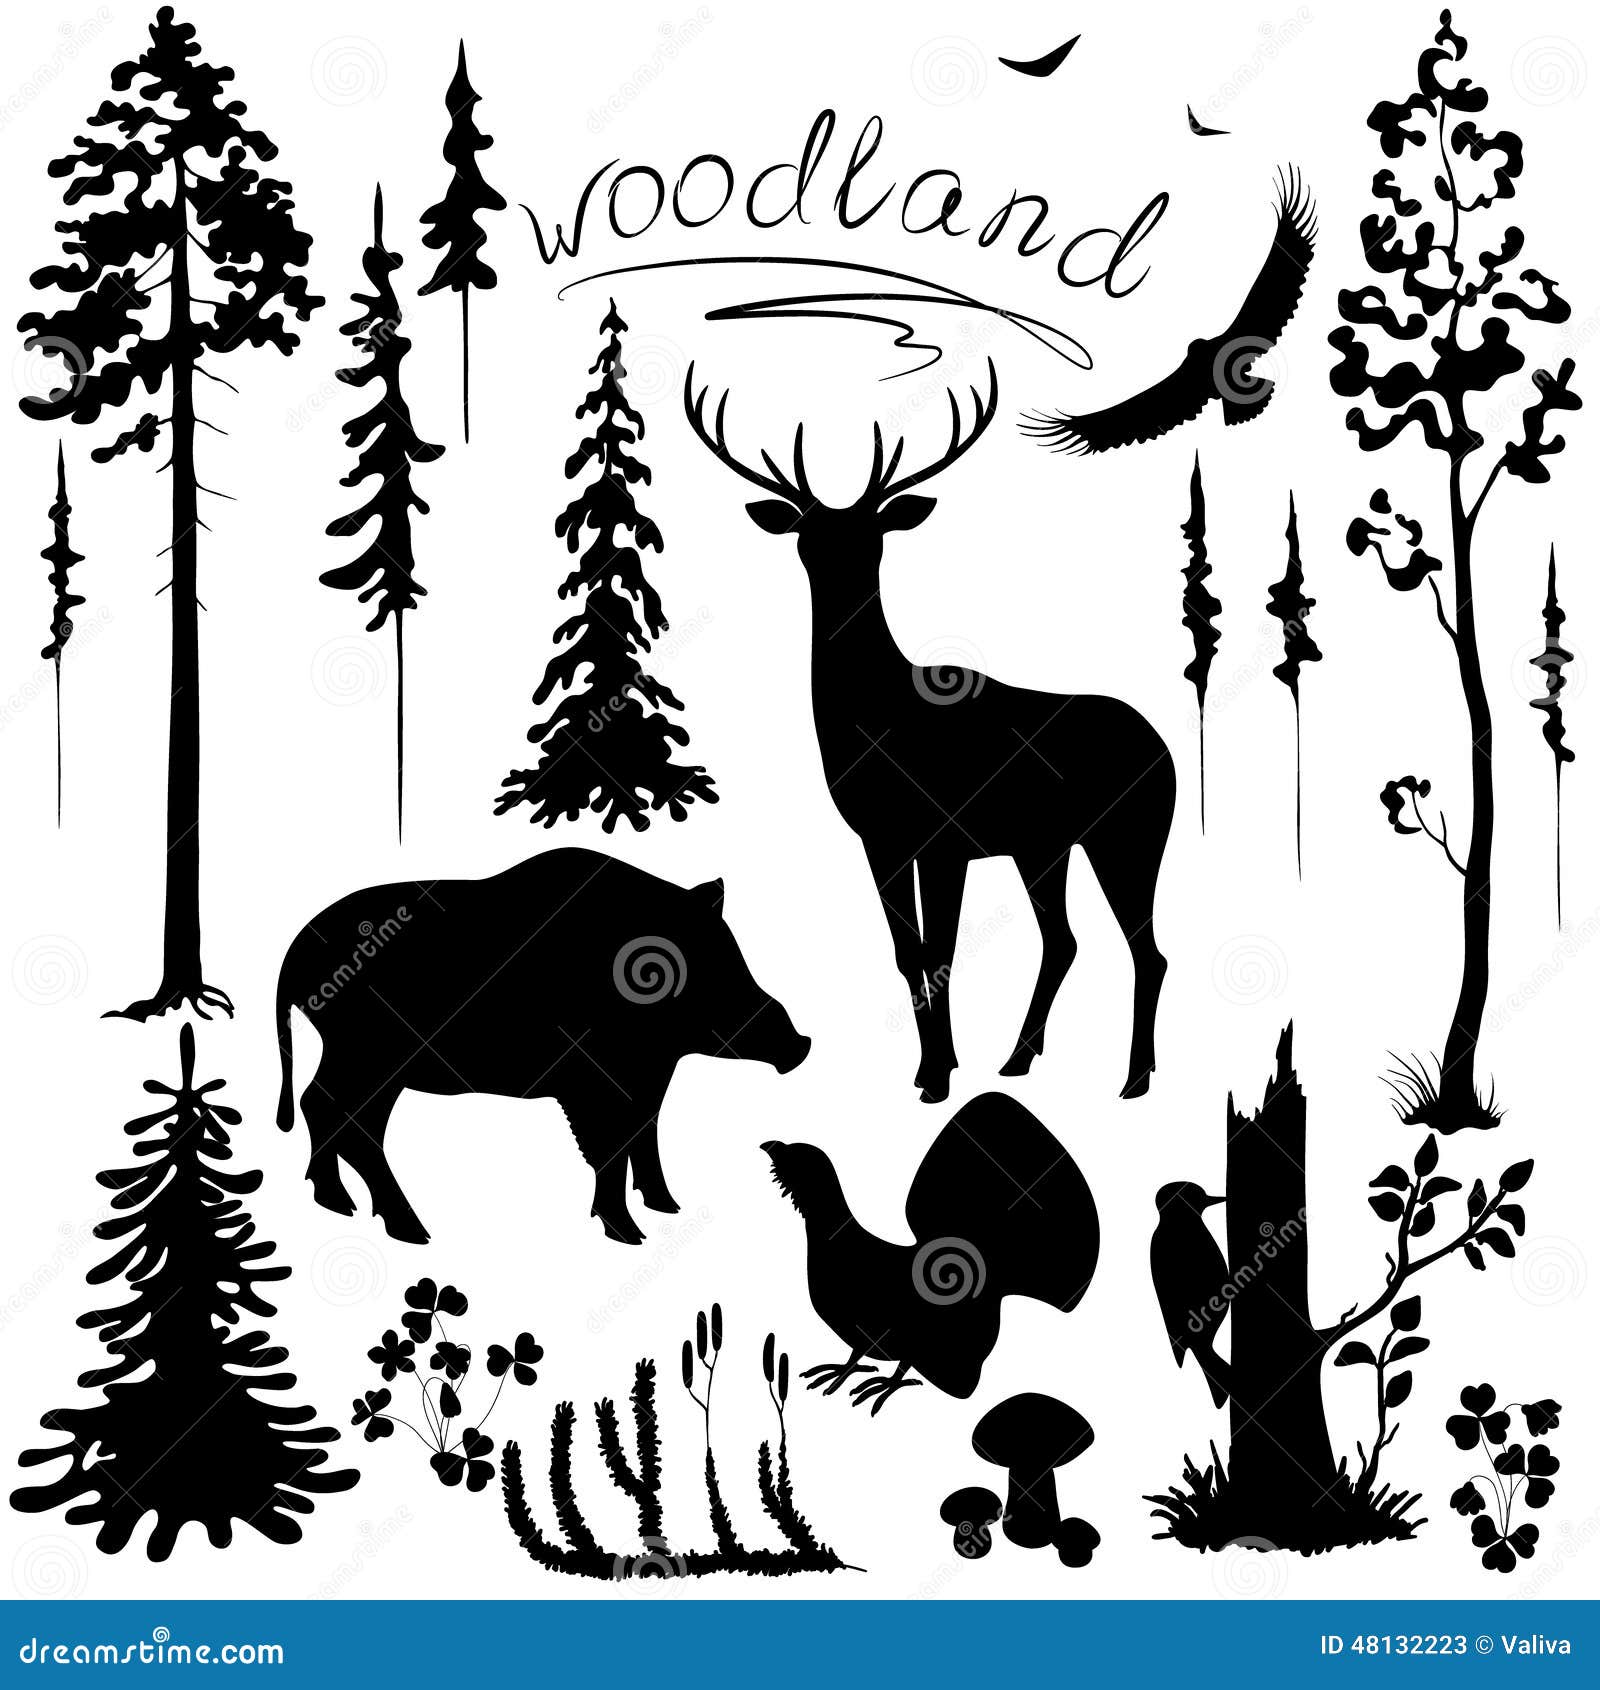 woodland plants and animals set